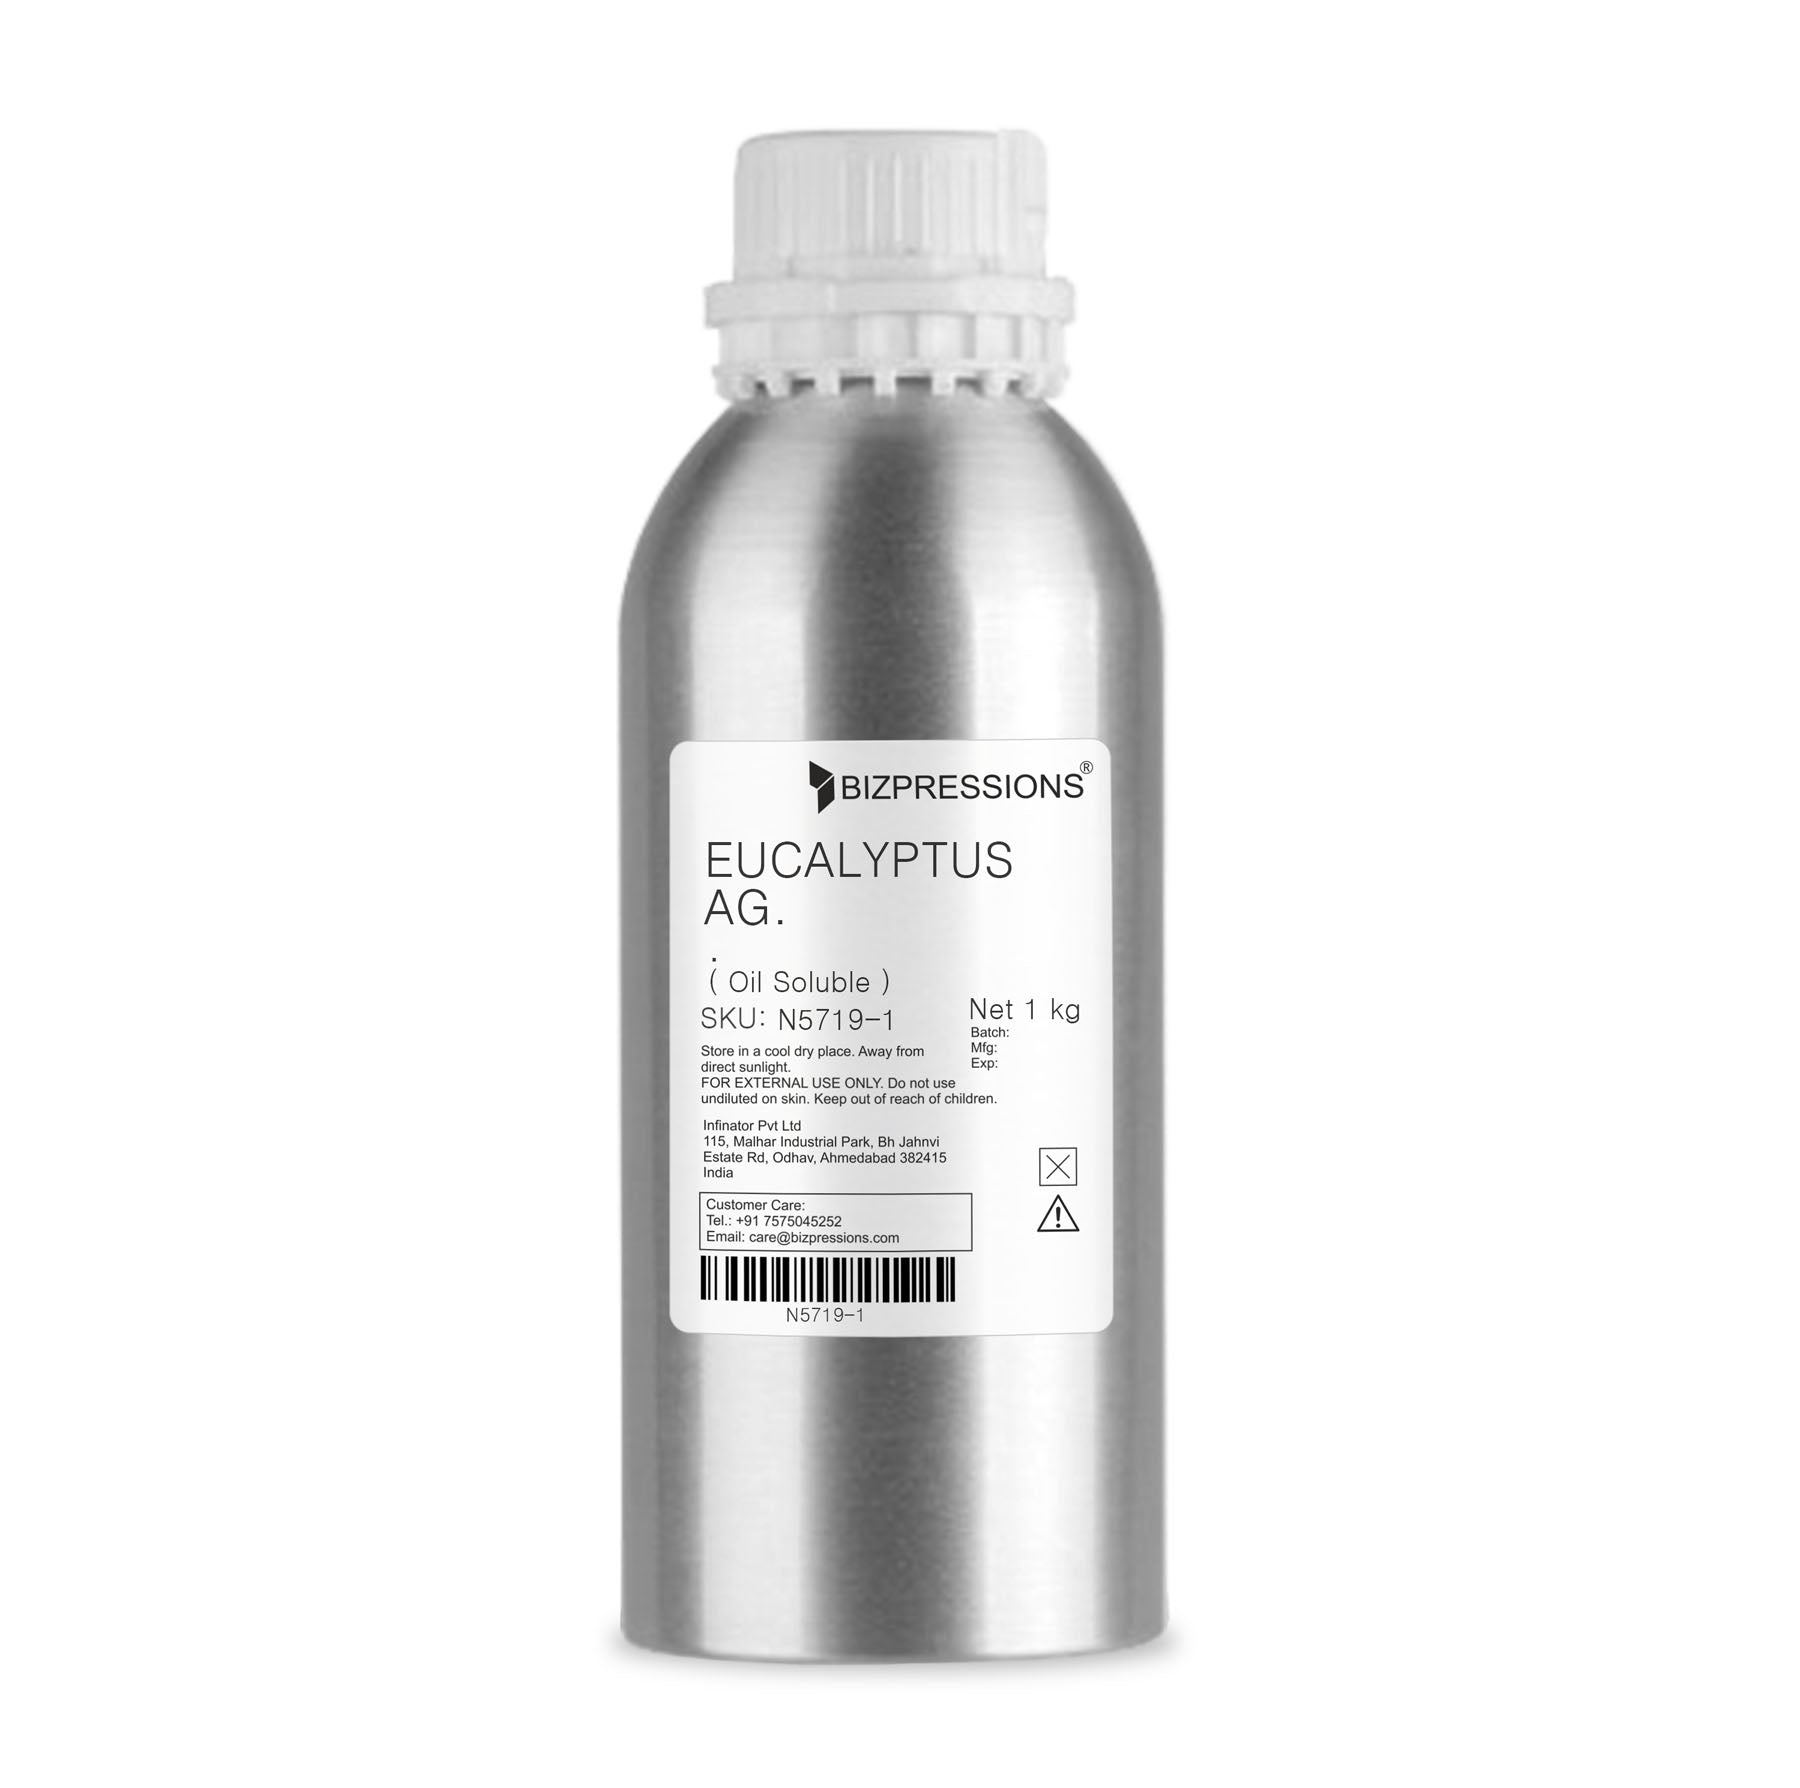 EUCALYPTUS AG. - Fragrance ( Oil Soluble ) - 1 kg